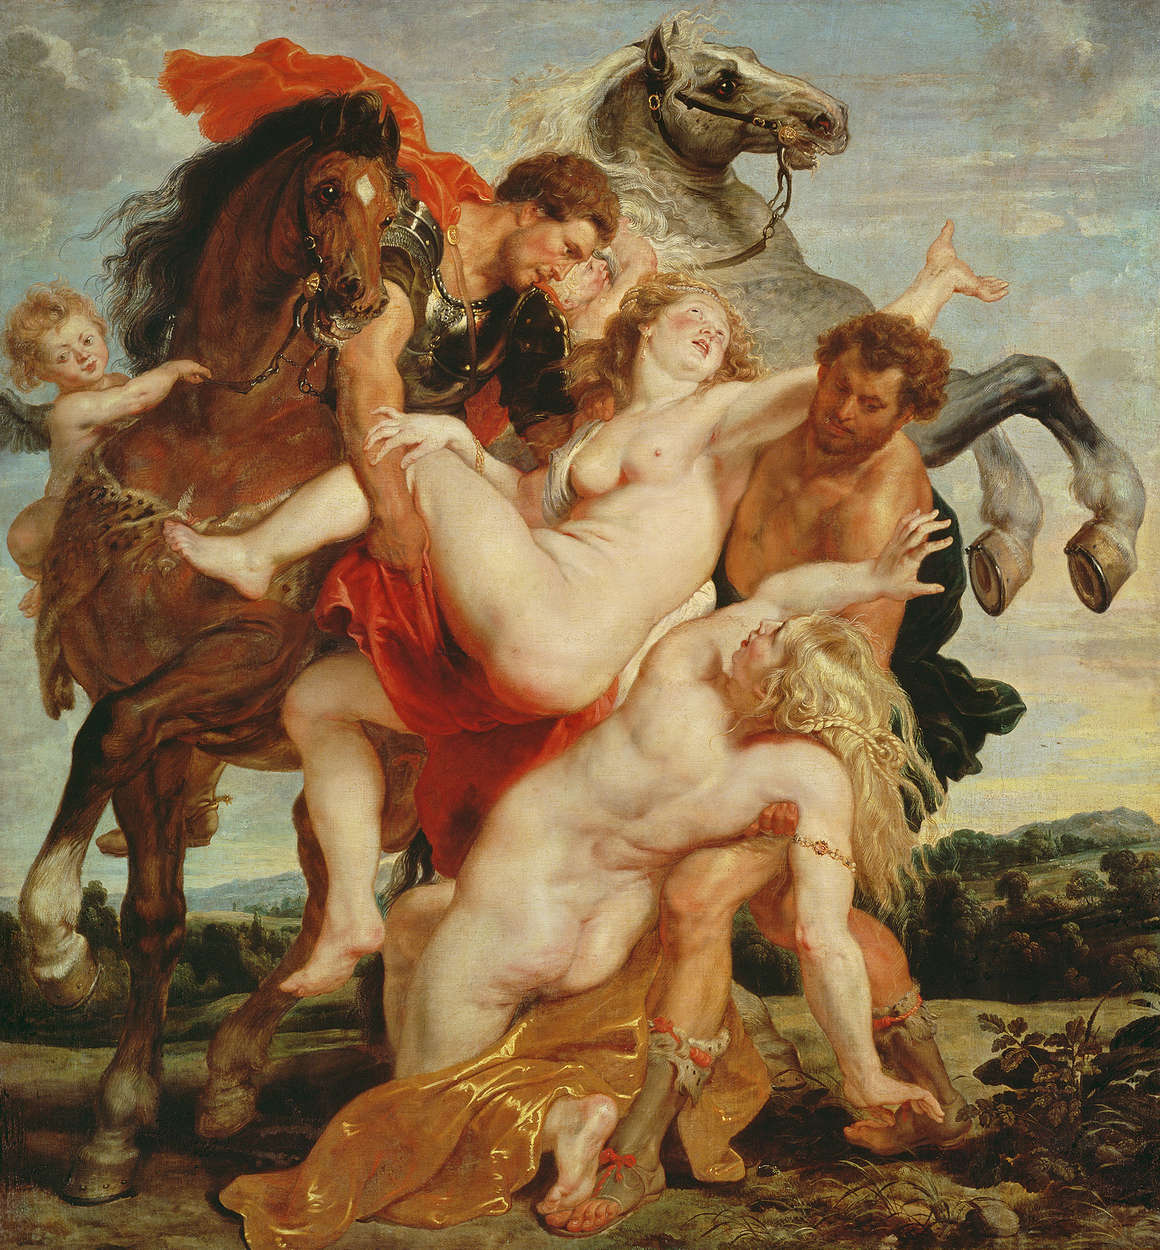             Photo wallpaper "Rape of the daughters of Leucippus" by Peter Paul Rubens
        